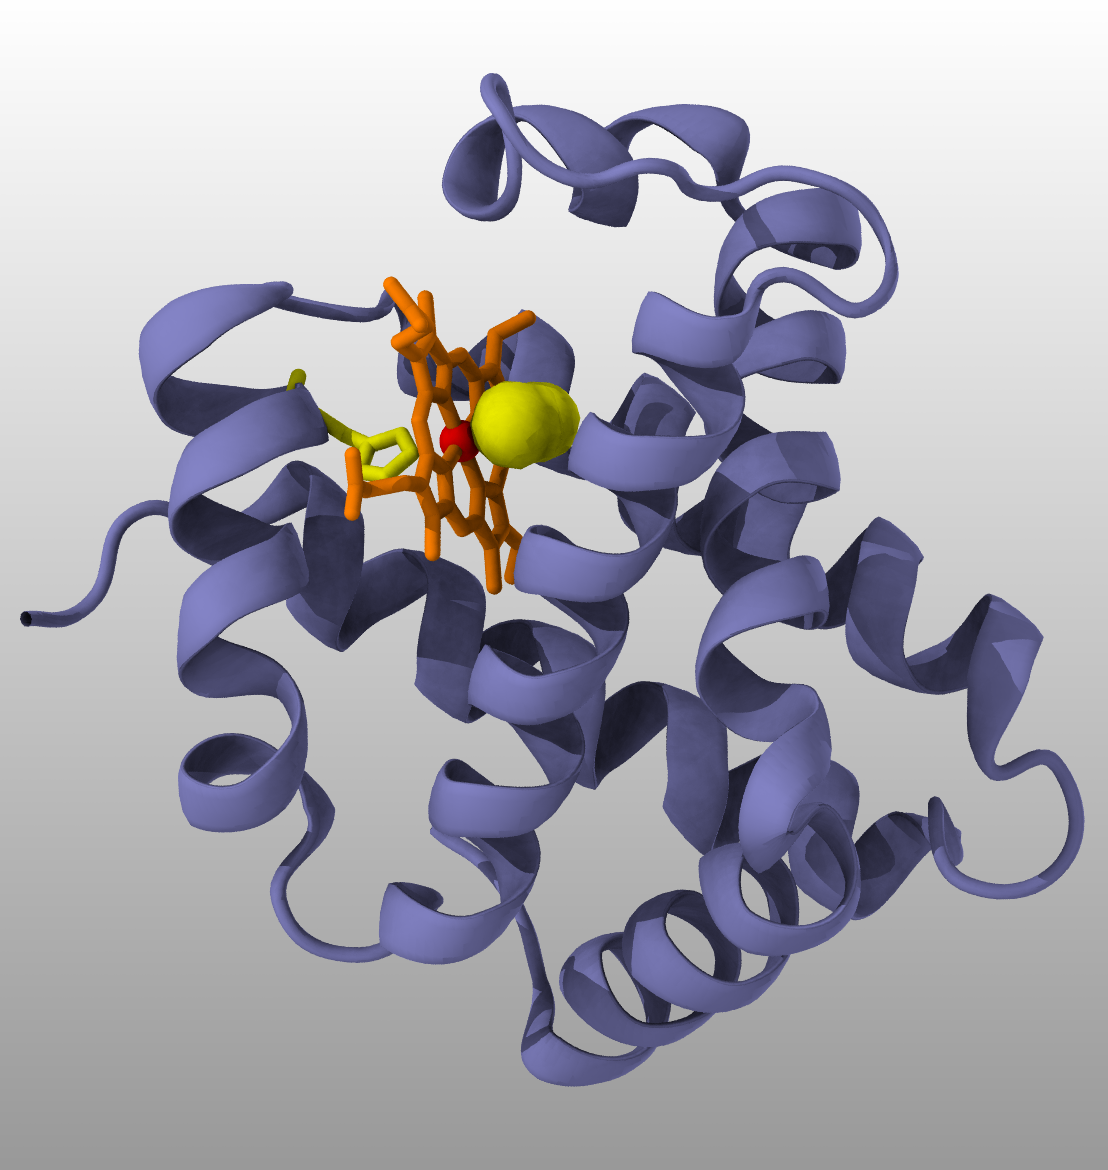 Hemoglobin protein with ligand